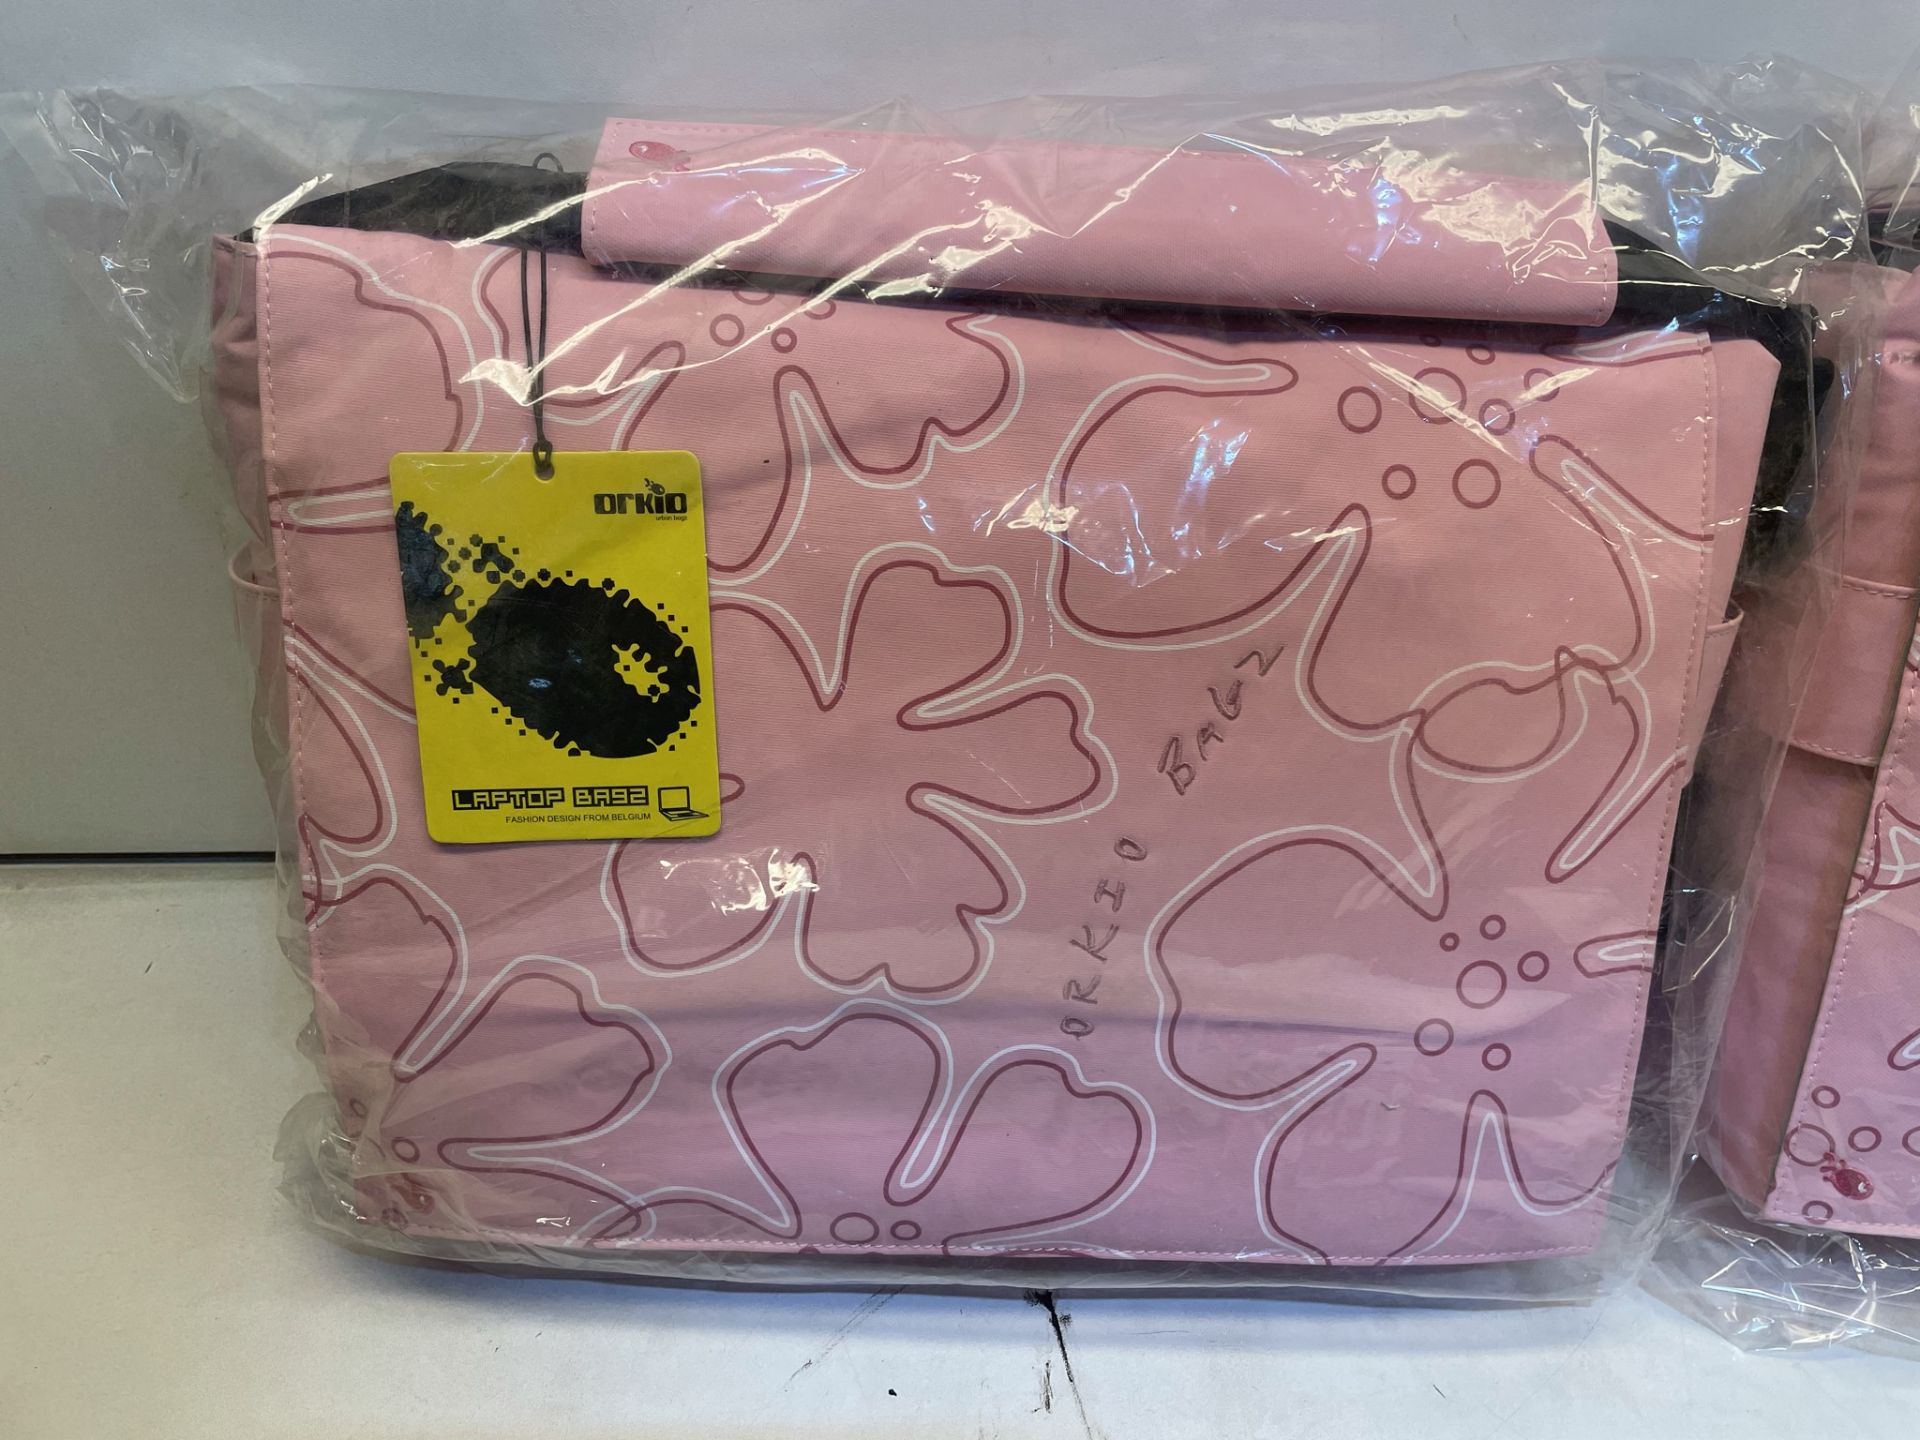 24 x Orkio 0914001 15.4" Urban Laptop Messenger Bags in Pink - Image 2 of 5